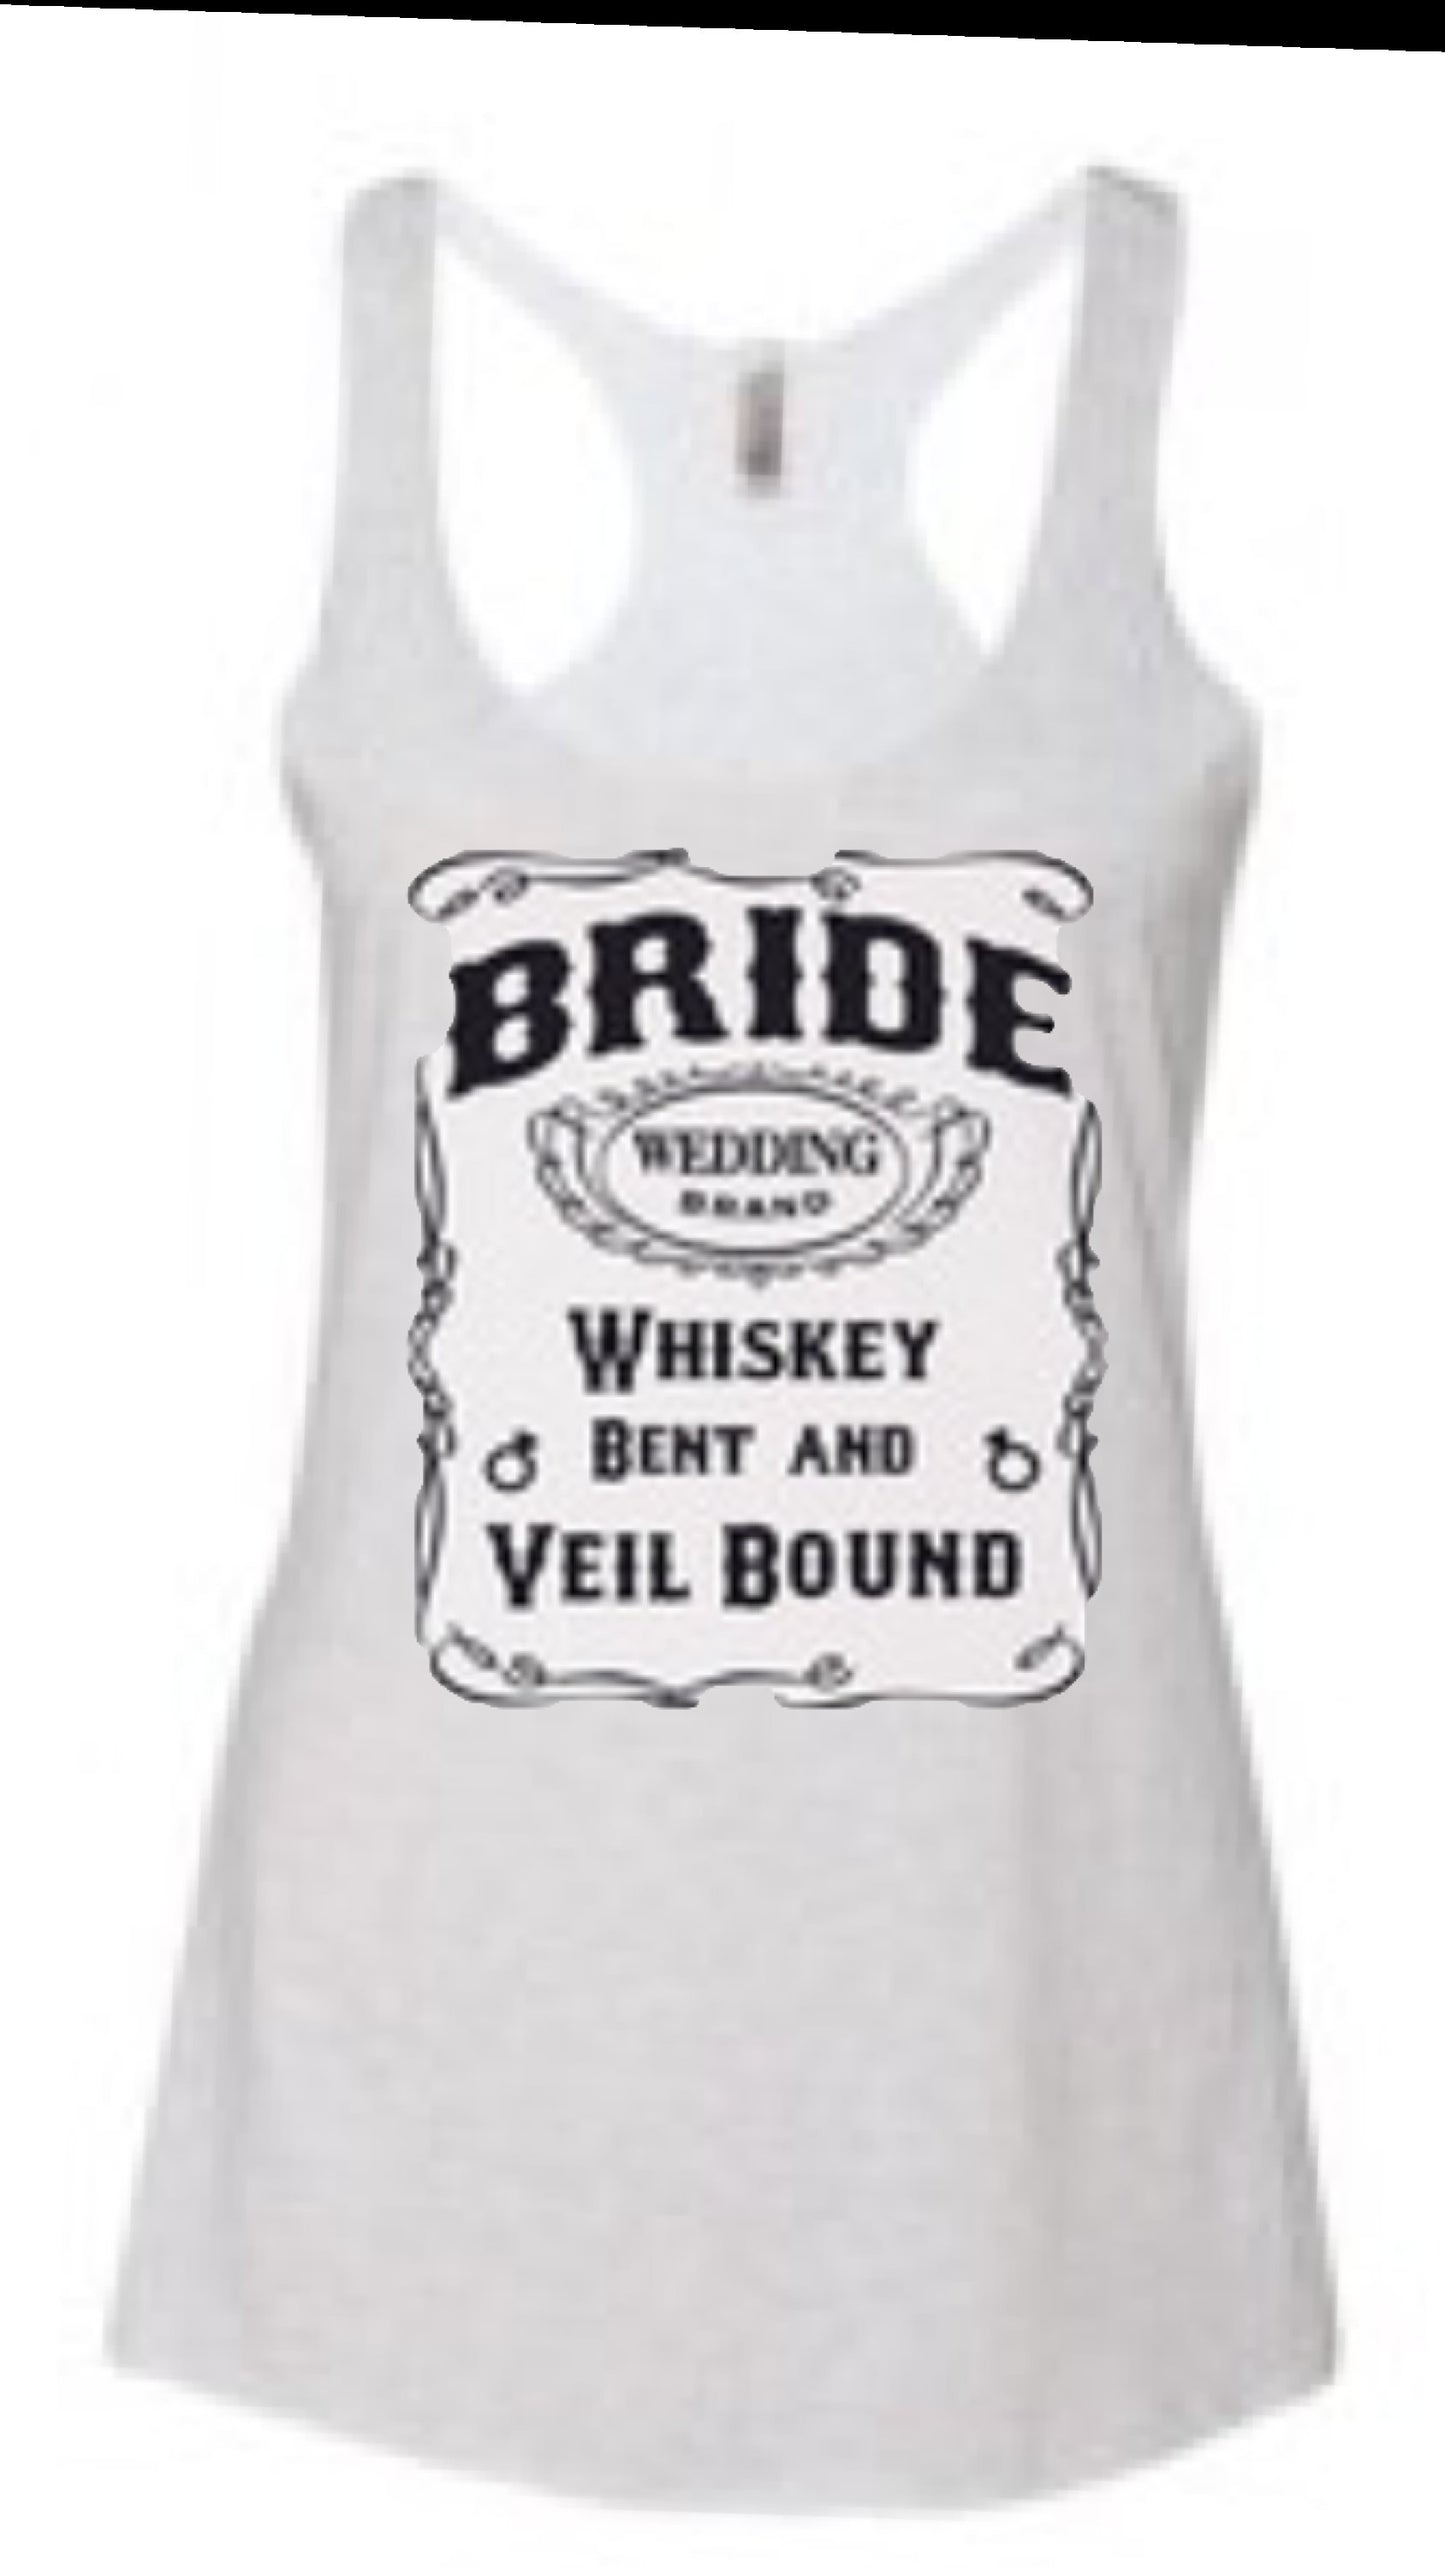 Whiskey bride shirt, bridesmaid shirts, bride shirt,  bride and co shirts, bridesmaid shirts, bachelorette weekend, Nashville Bachelorette